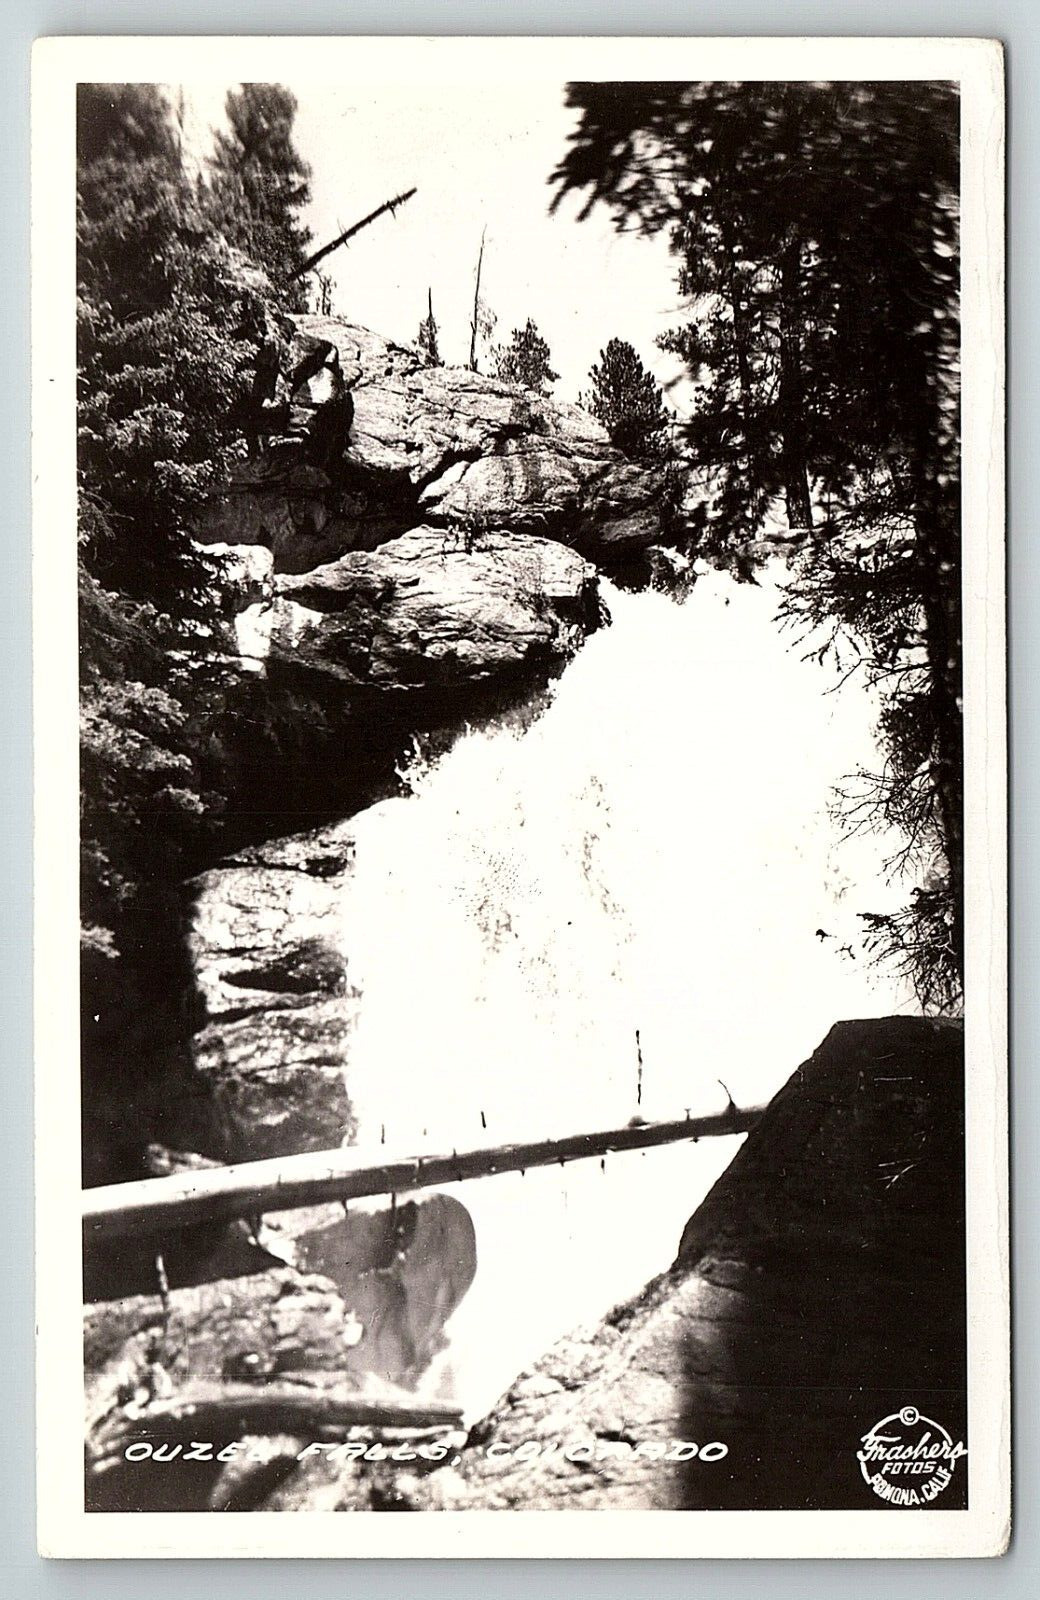 1930s OUZEL FALLS COLORADO ROCKY MOUNTAINS FRASHERS FOTOS RPPC POSTCARD P2464